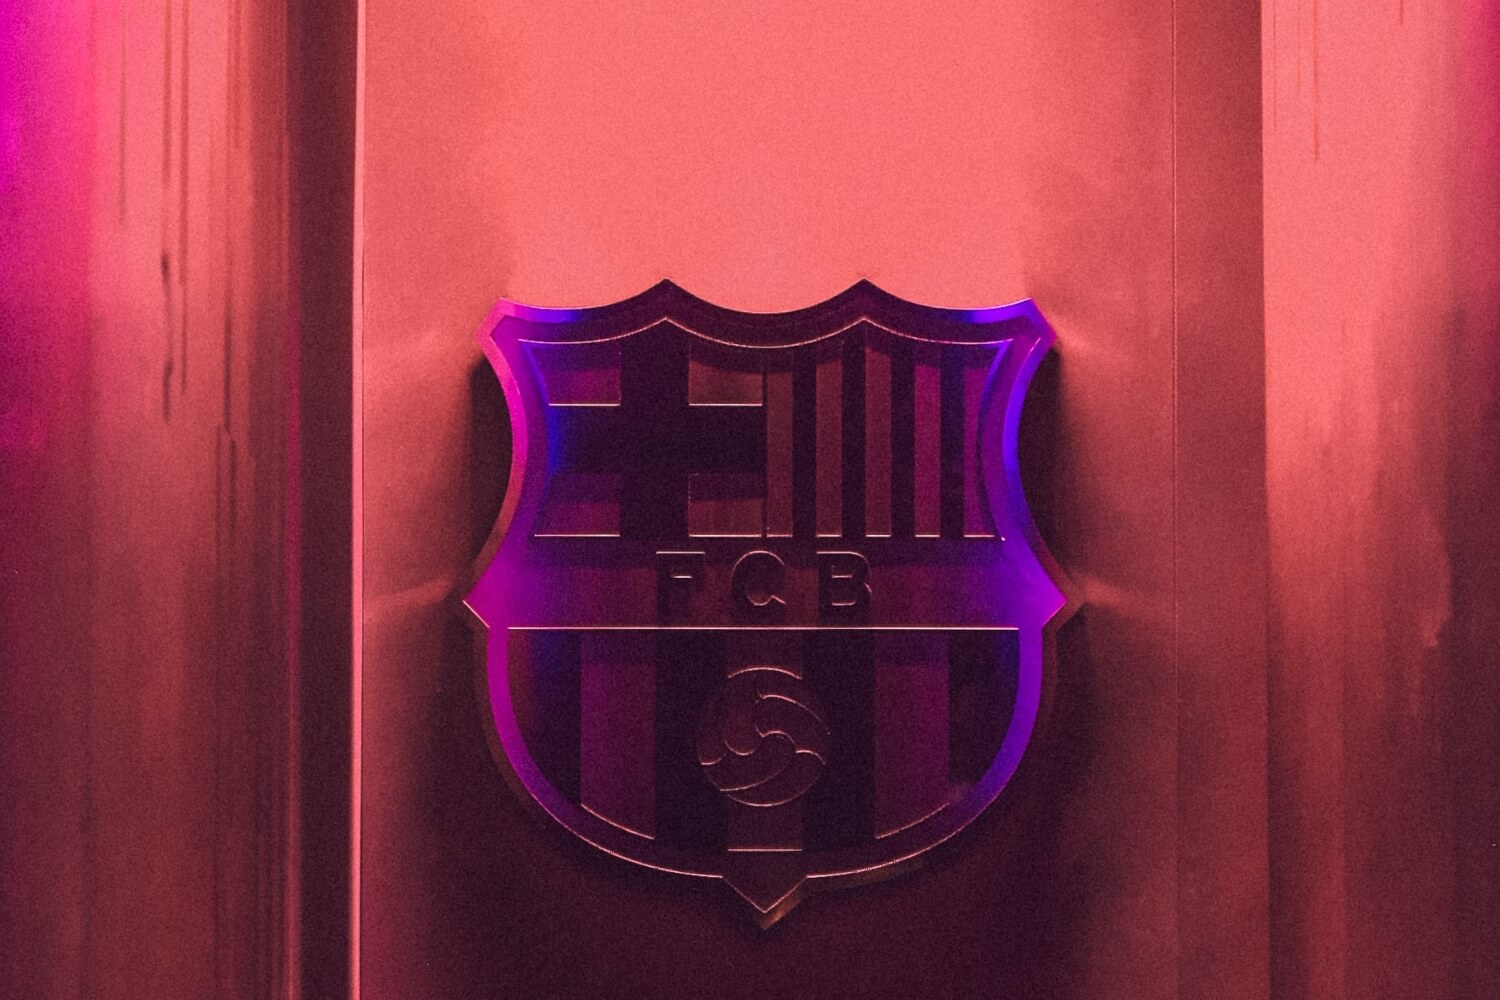 Futbol Club Barcelona, the #1 many people love!!